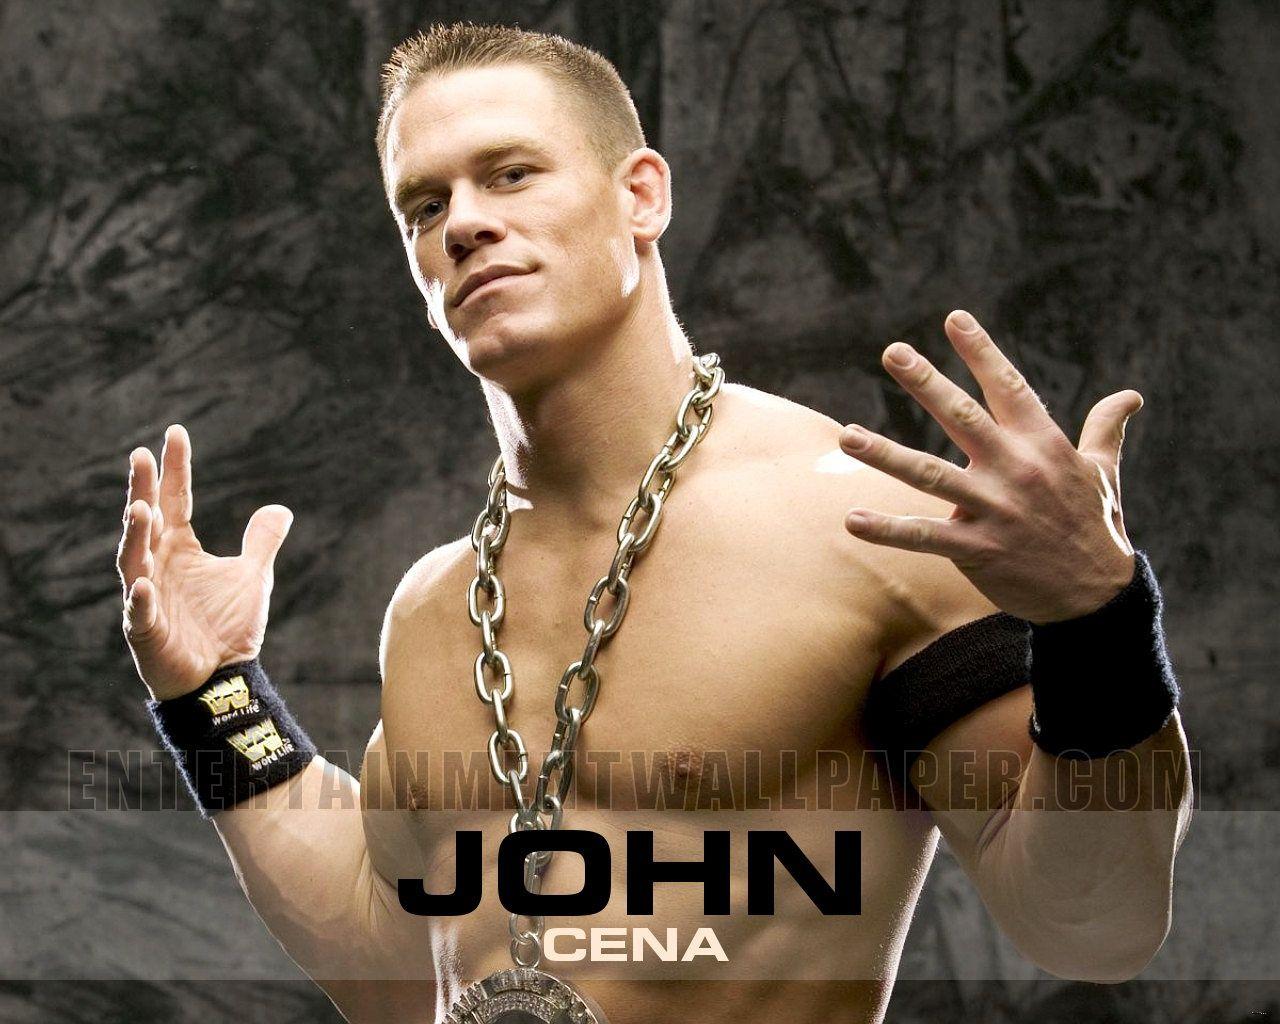 Wwe Wallpaper John Cena. John Cena Wallpaper. Wwe